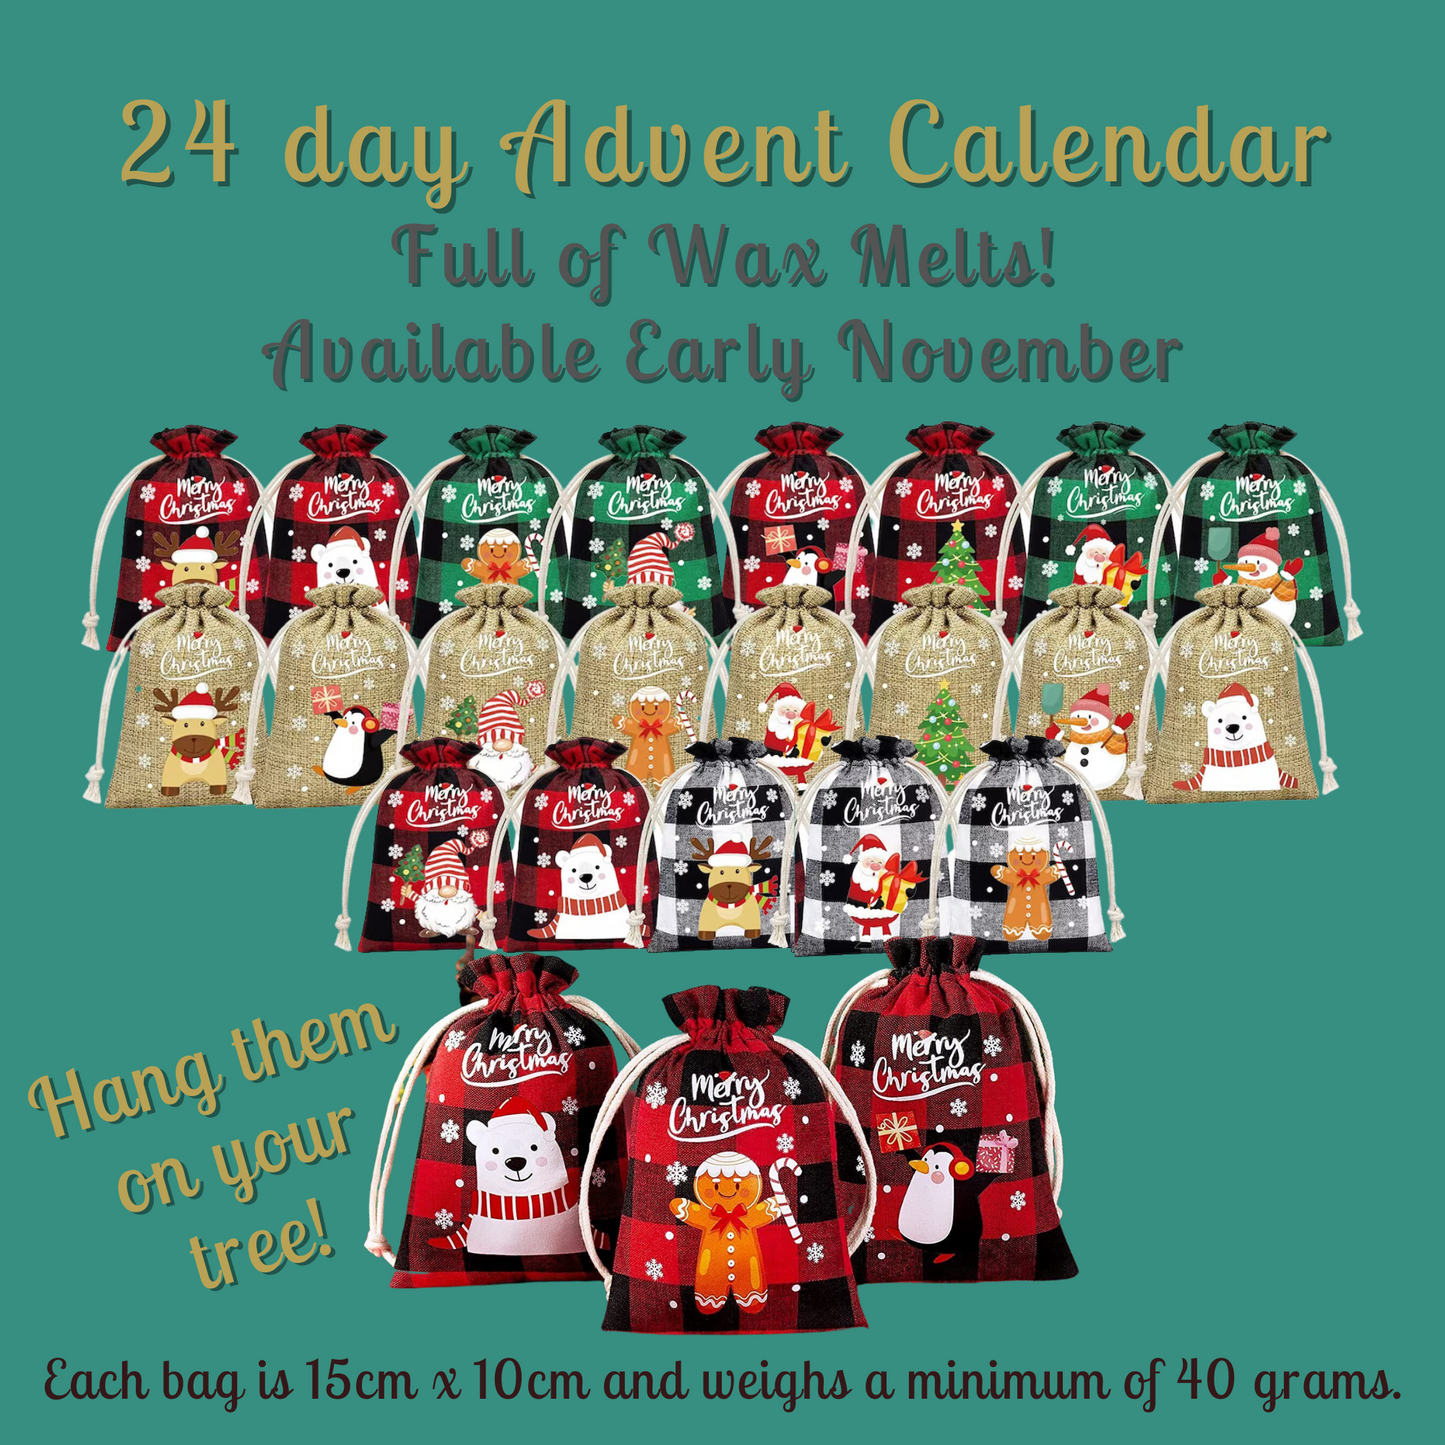 Wax melt advent calendar 24 day ($120+ value)